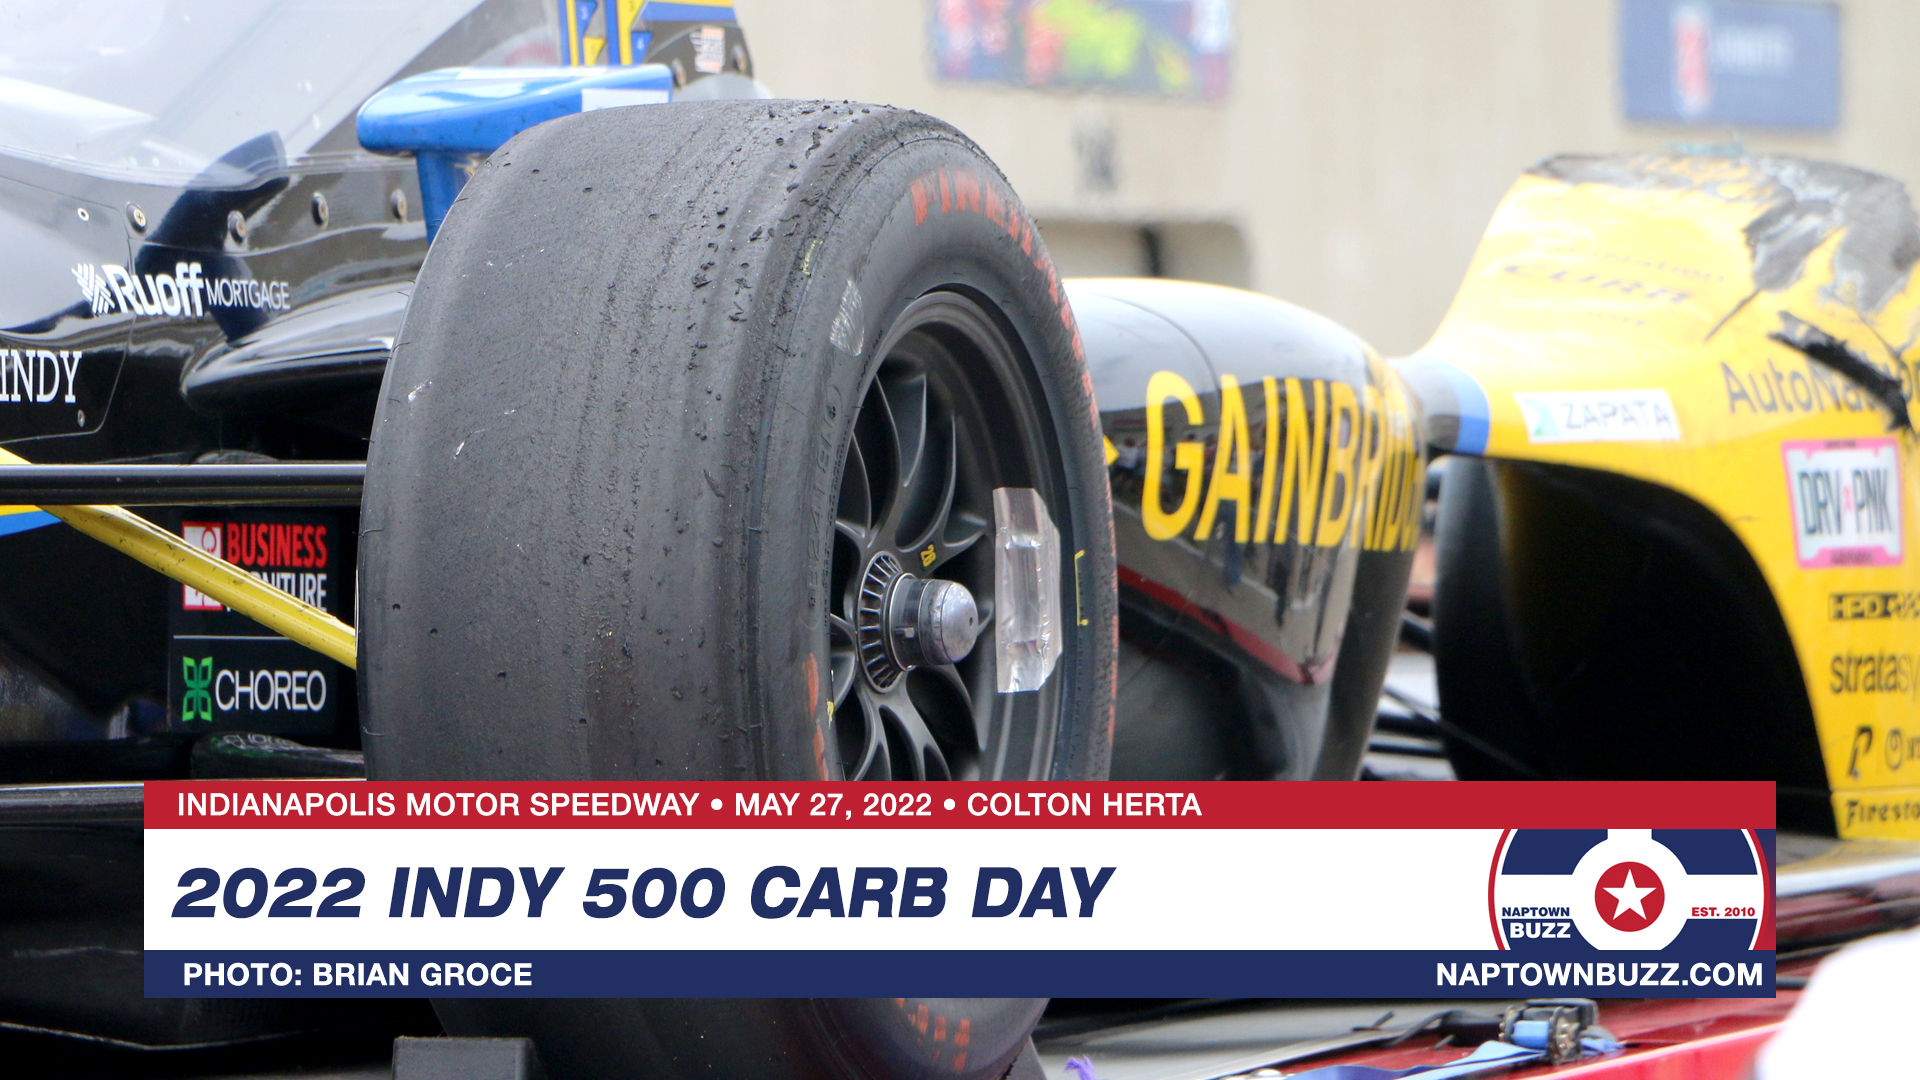 Indy 500 Carb Day May 27, 2022 Colton Herta Car Crash